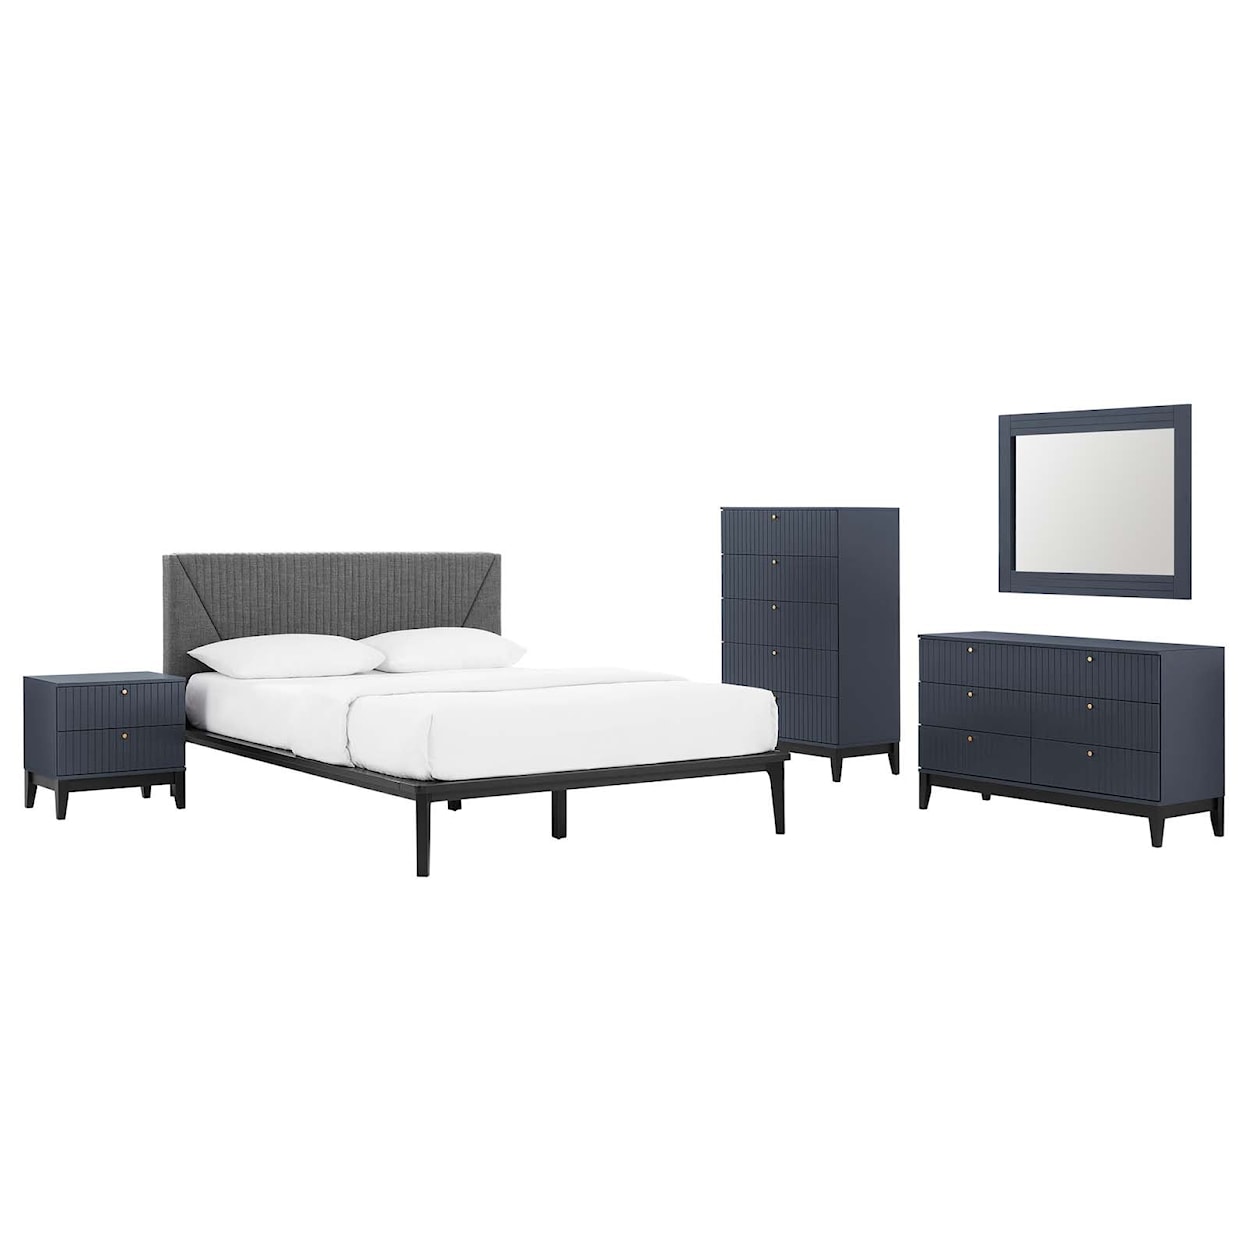 Modway Dakota Dakota 5 Piece Upholstered Bedroom Set